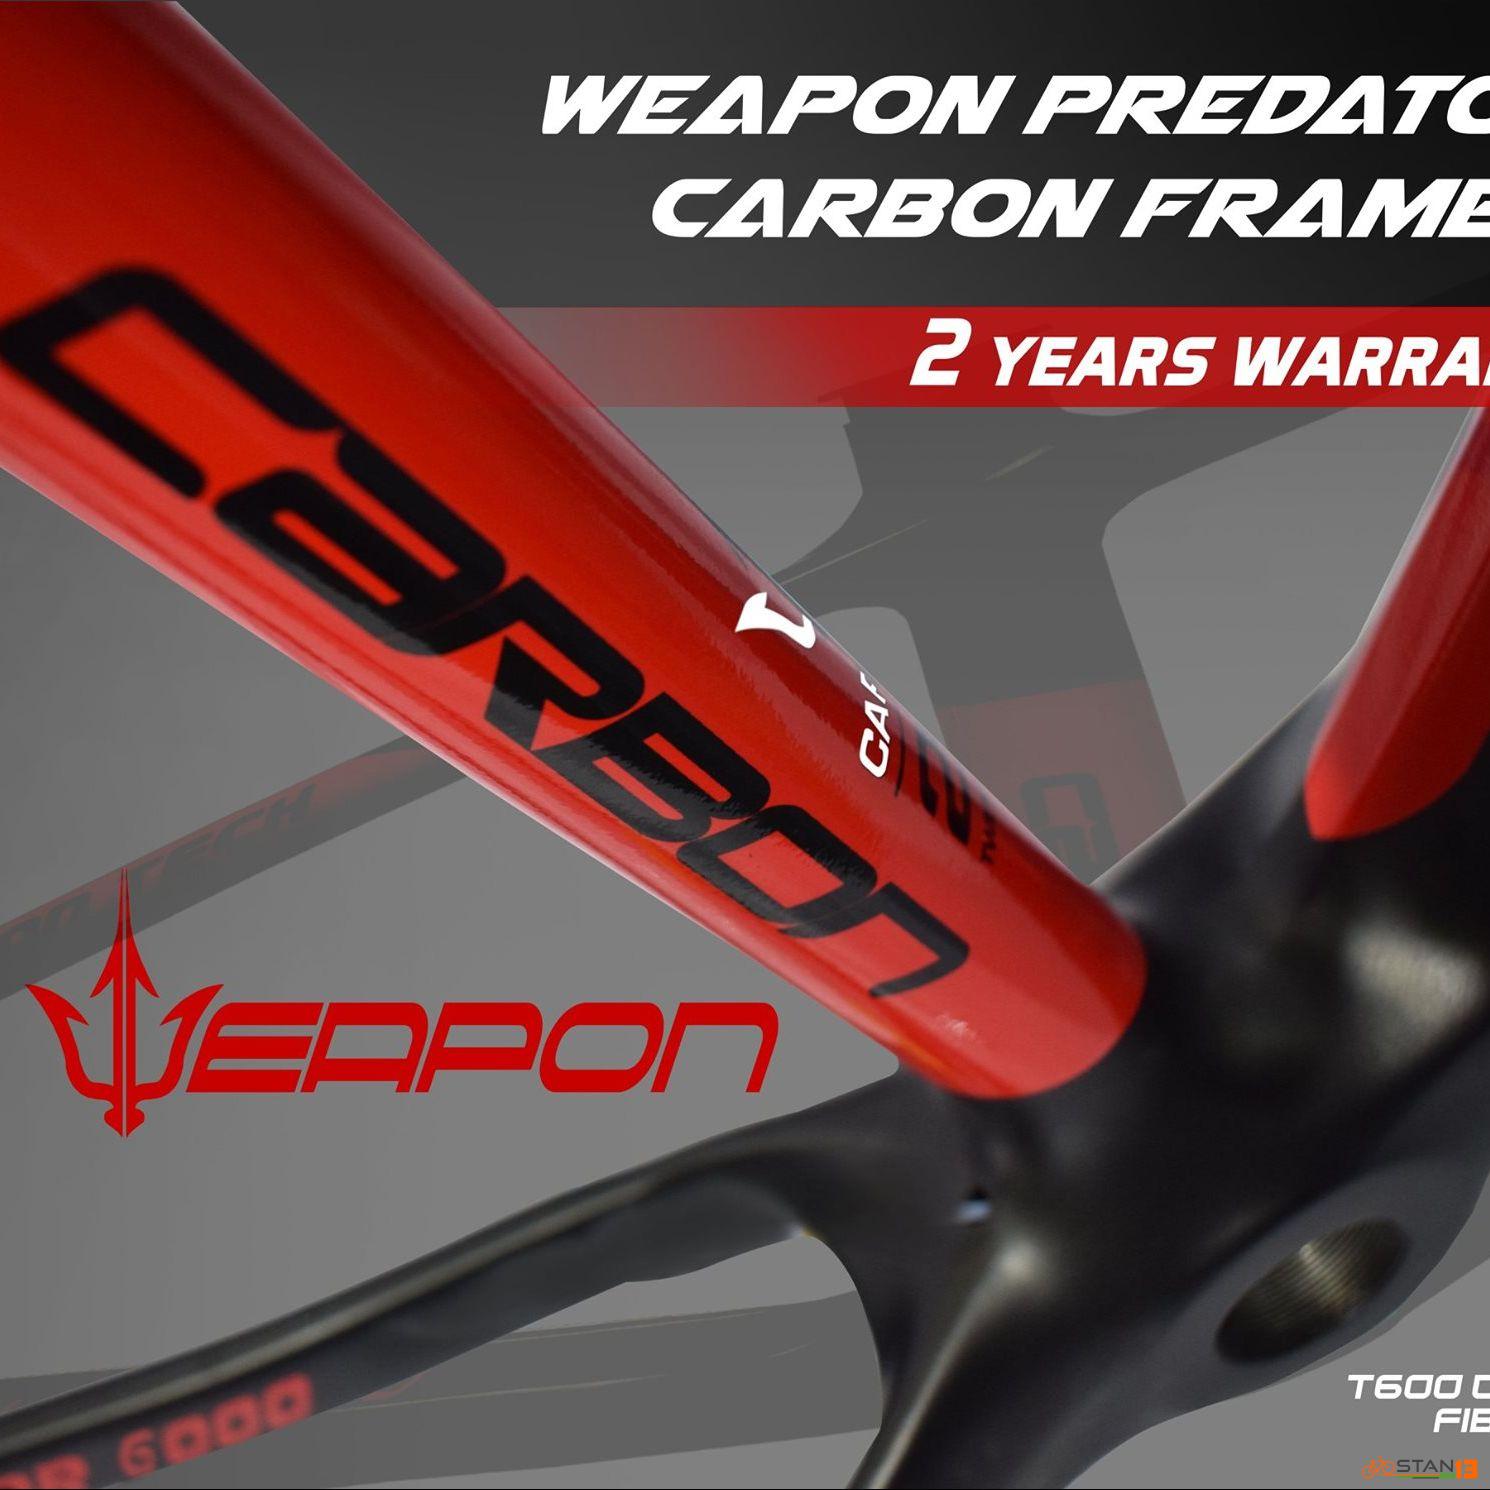 Frame Weapon Predator Carbon 7000 Frame Super Light Weight 2 Years Warranty